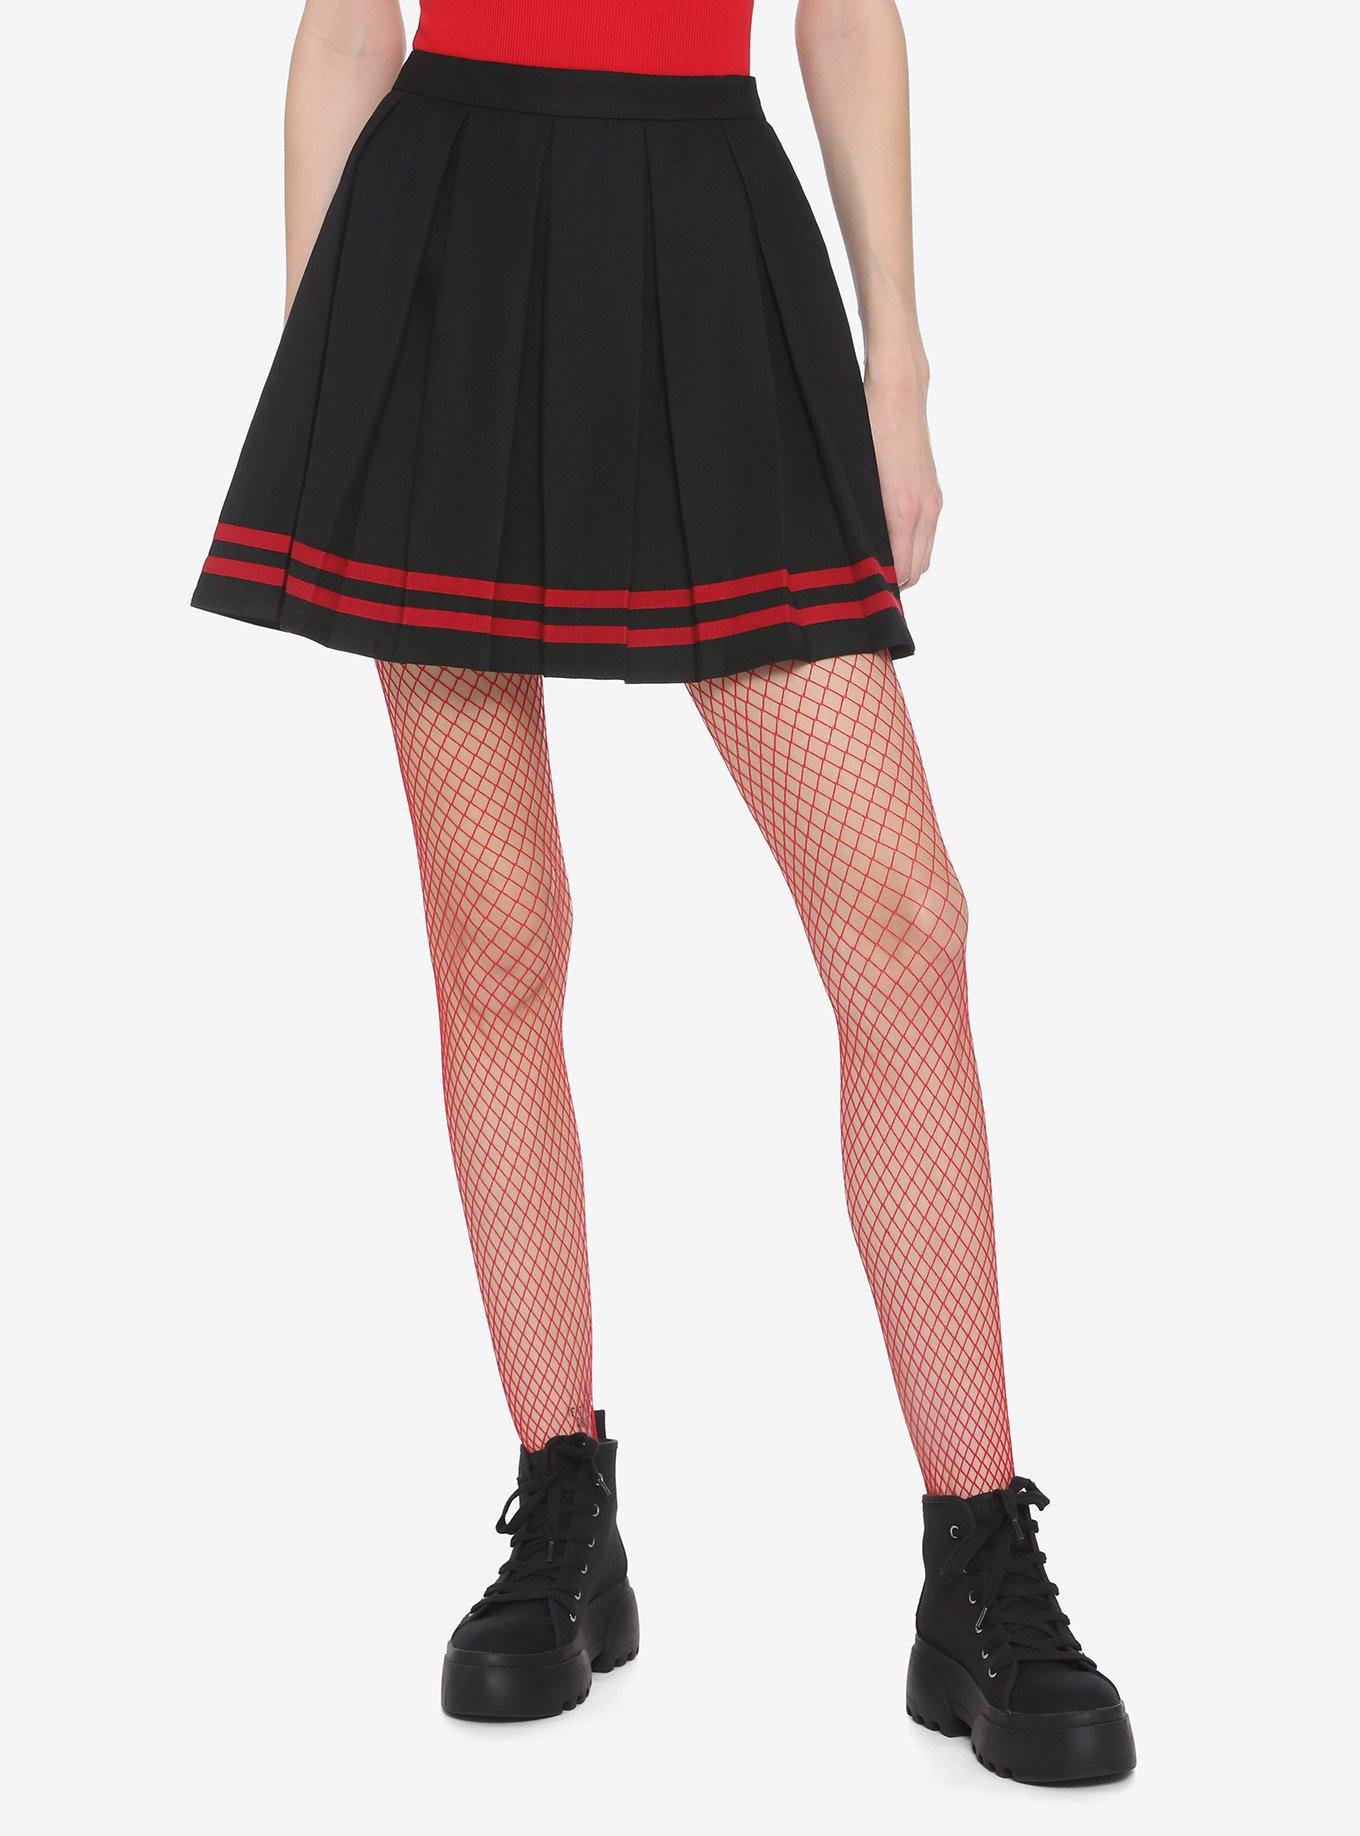 Black & Red Pleated Cheer Skirt, BLACK, hi-res